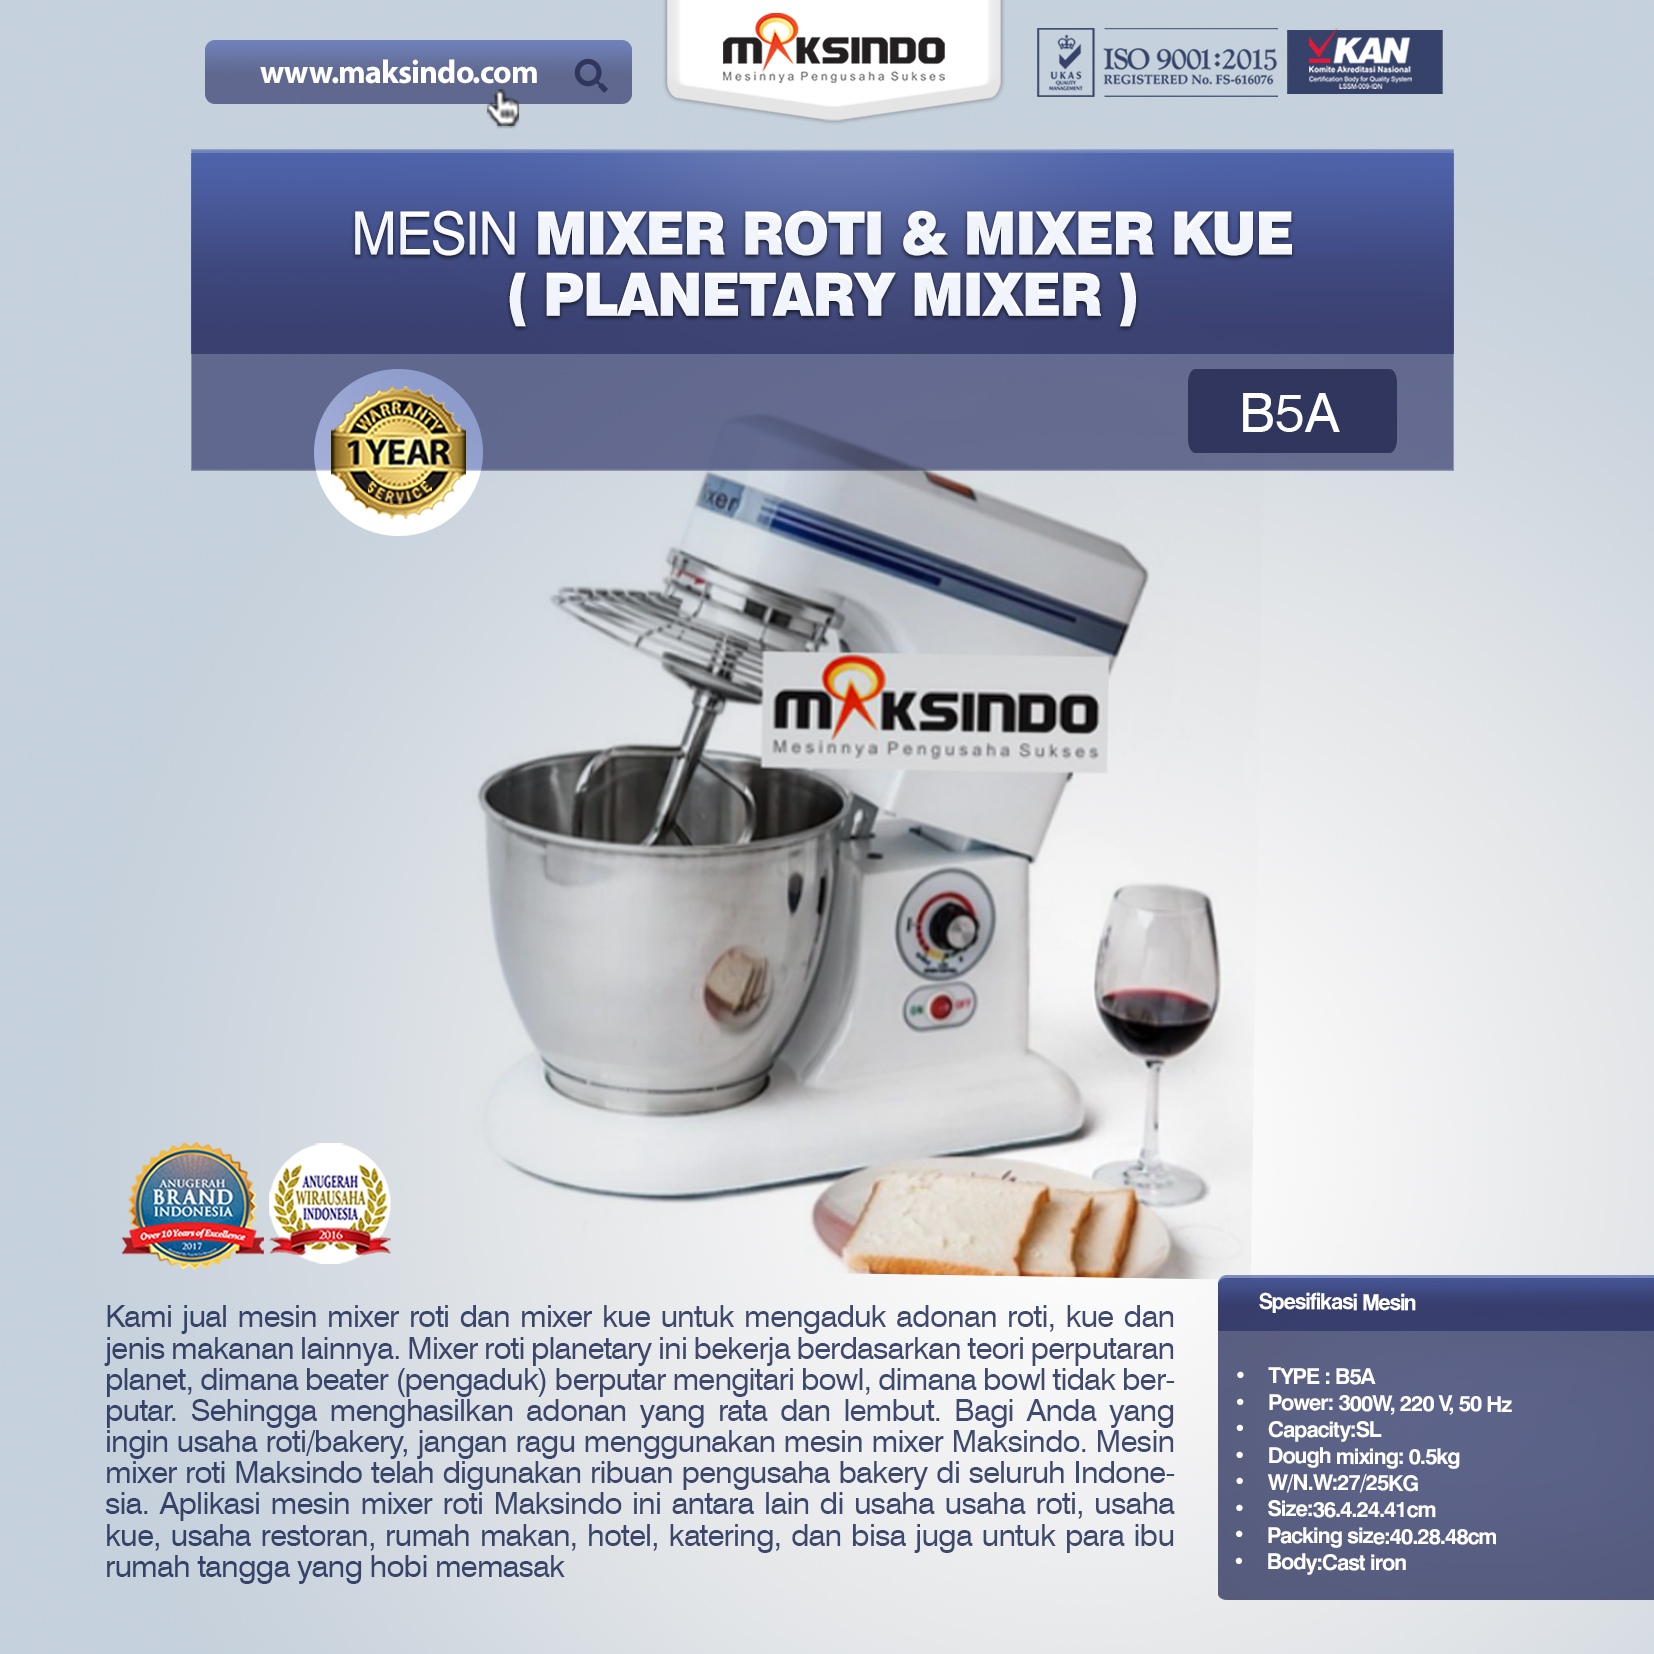 Jual Mesin Mixer Roti dan Kue Model Planetary di Blitar